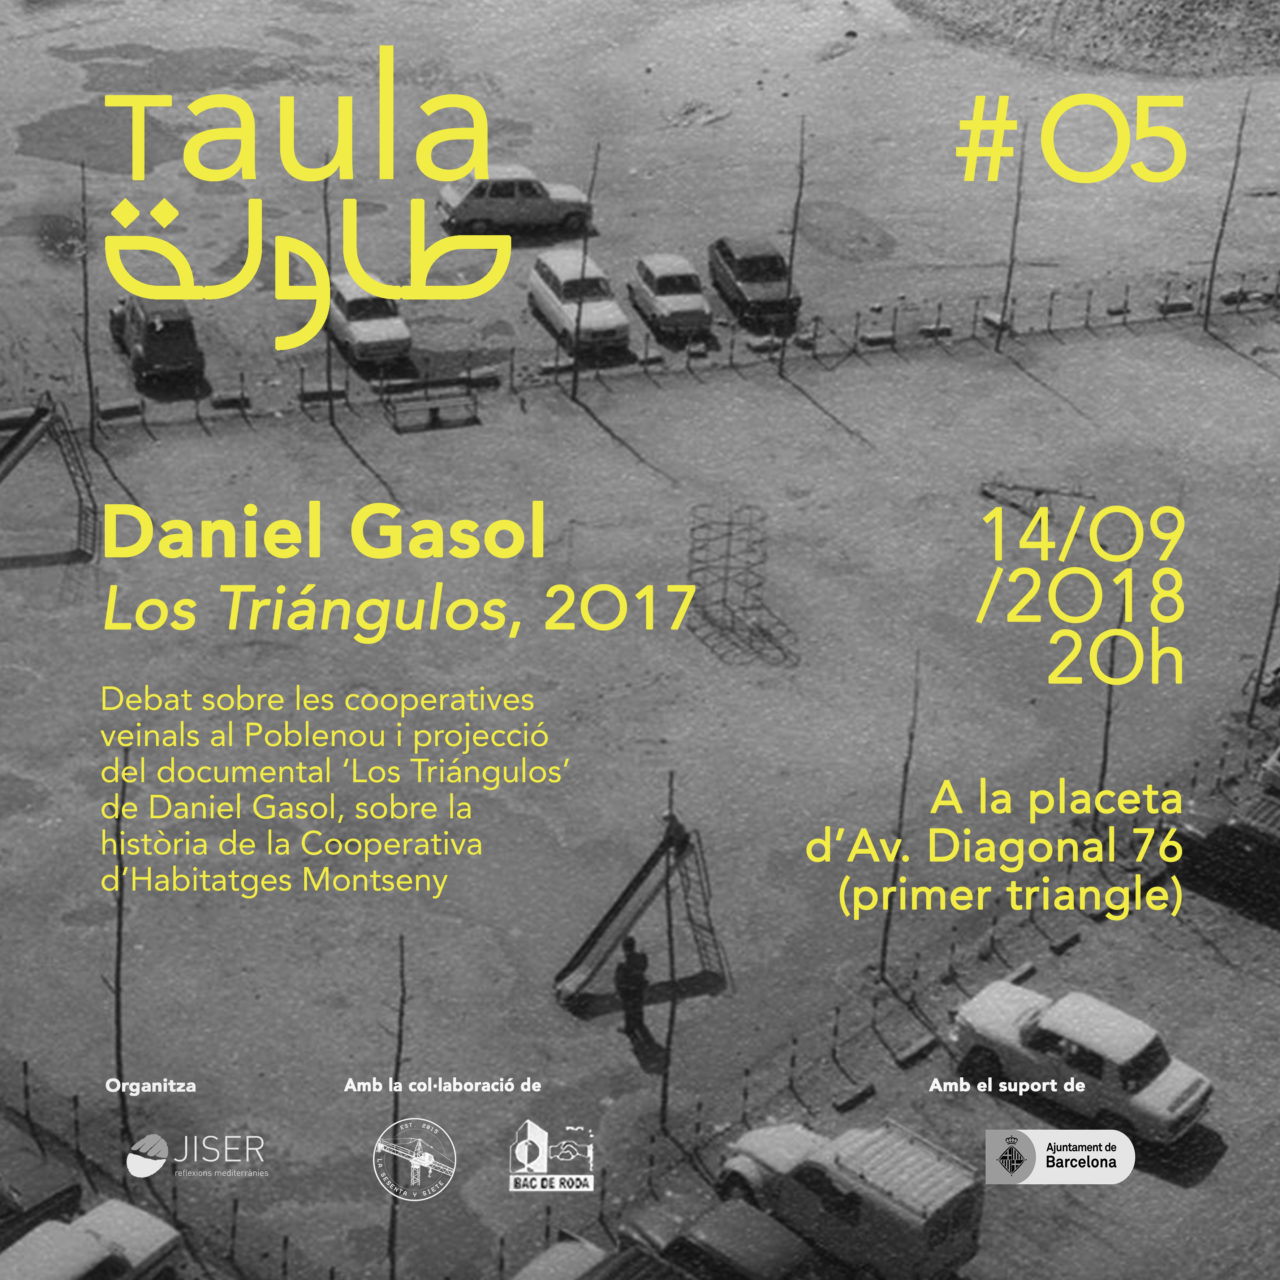 Daniel Gasol, TaulaO5, 2018.